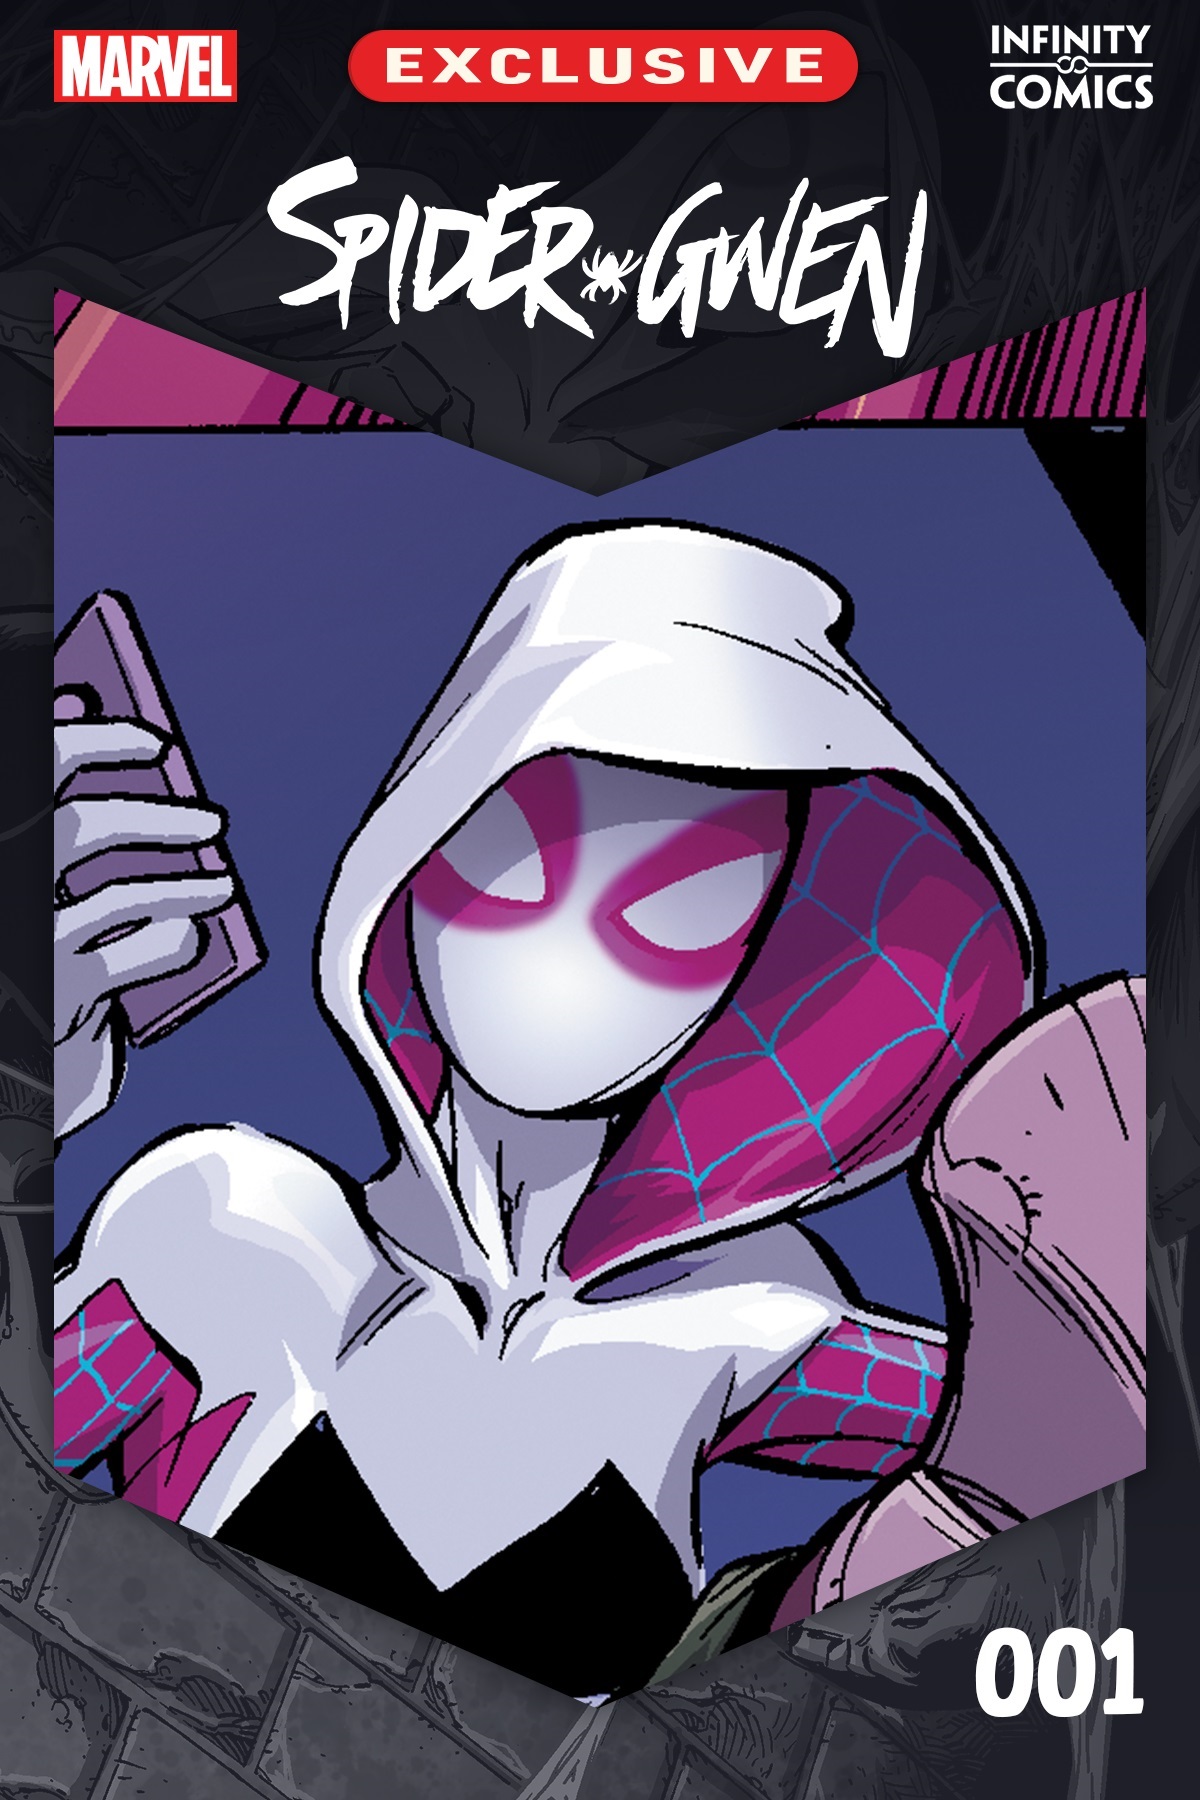 Spider-Gwen Infinity Comic Primer (2021) #1